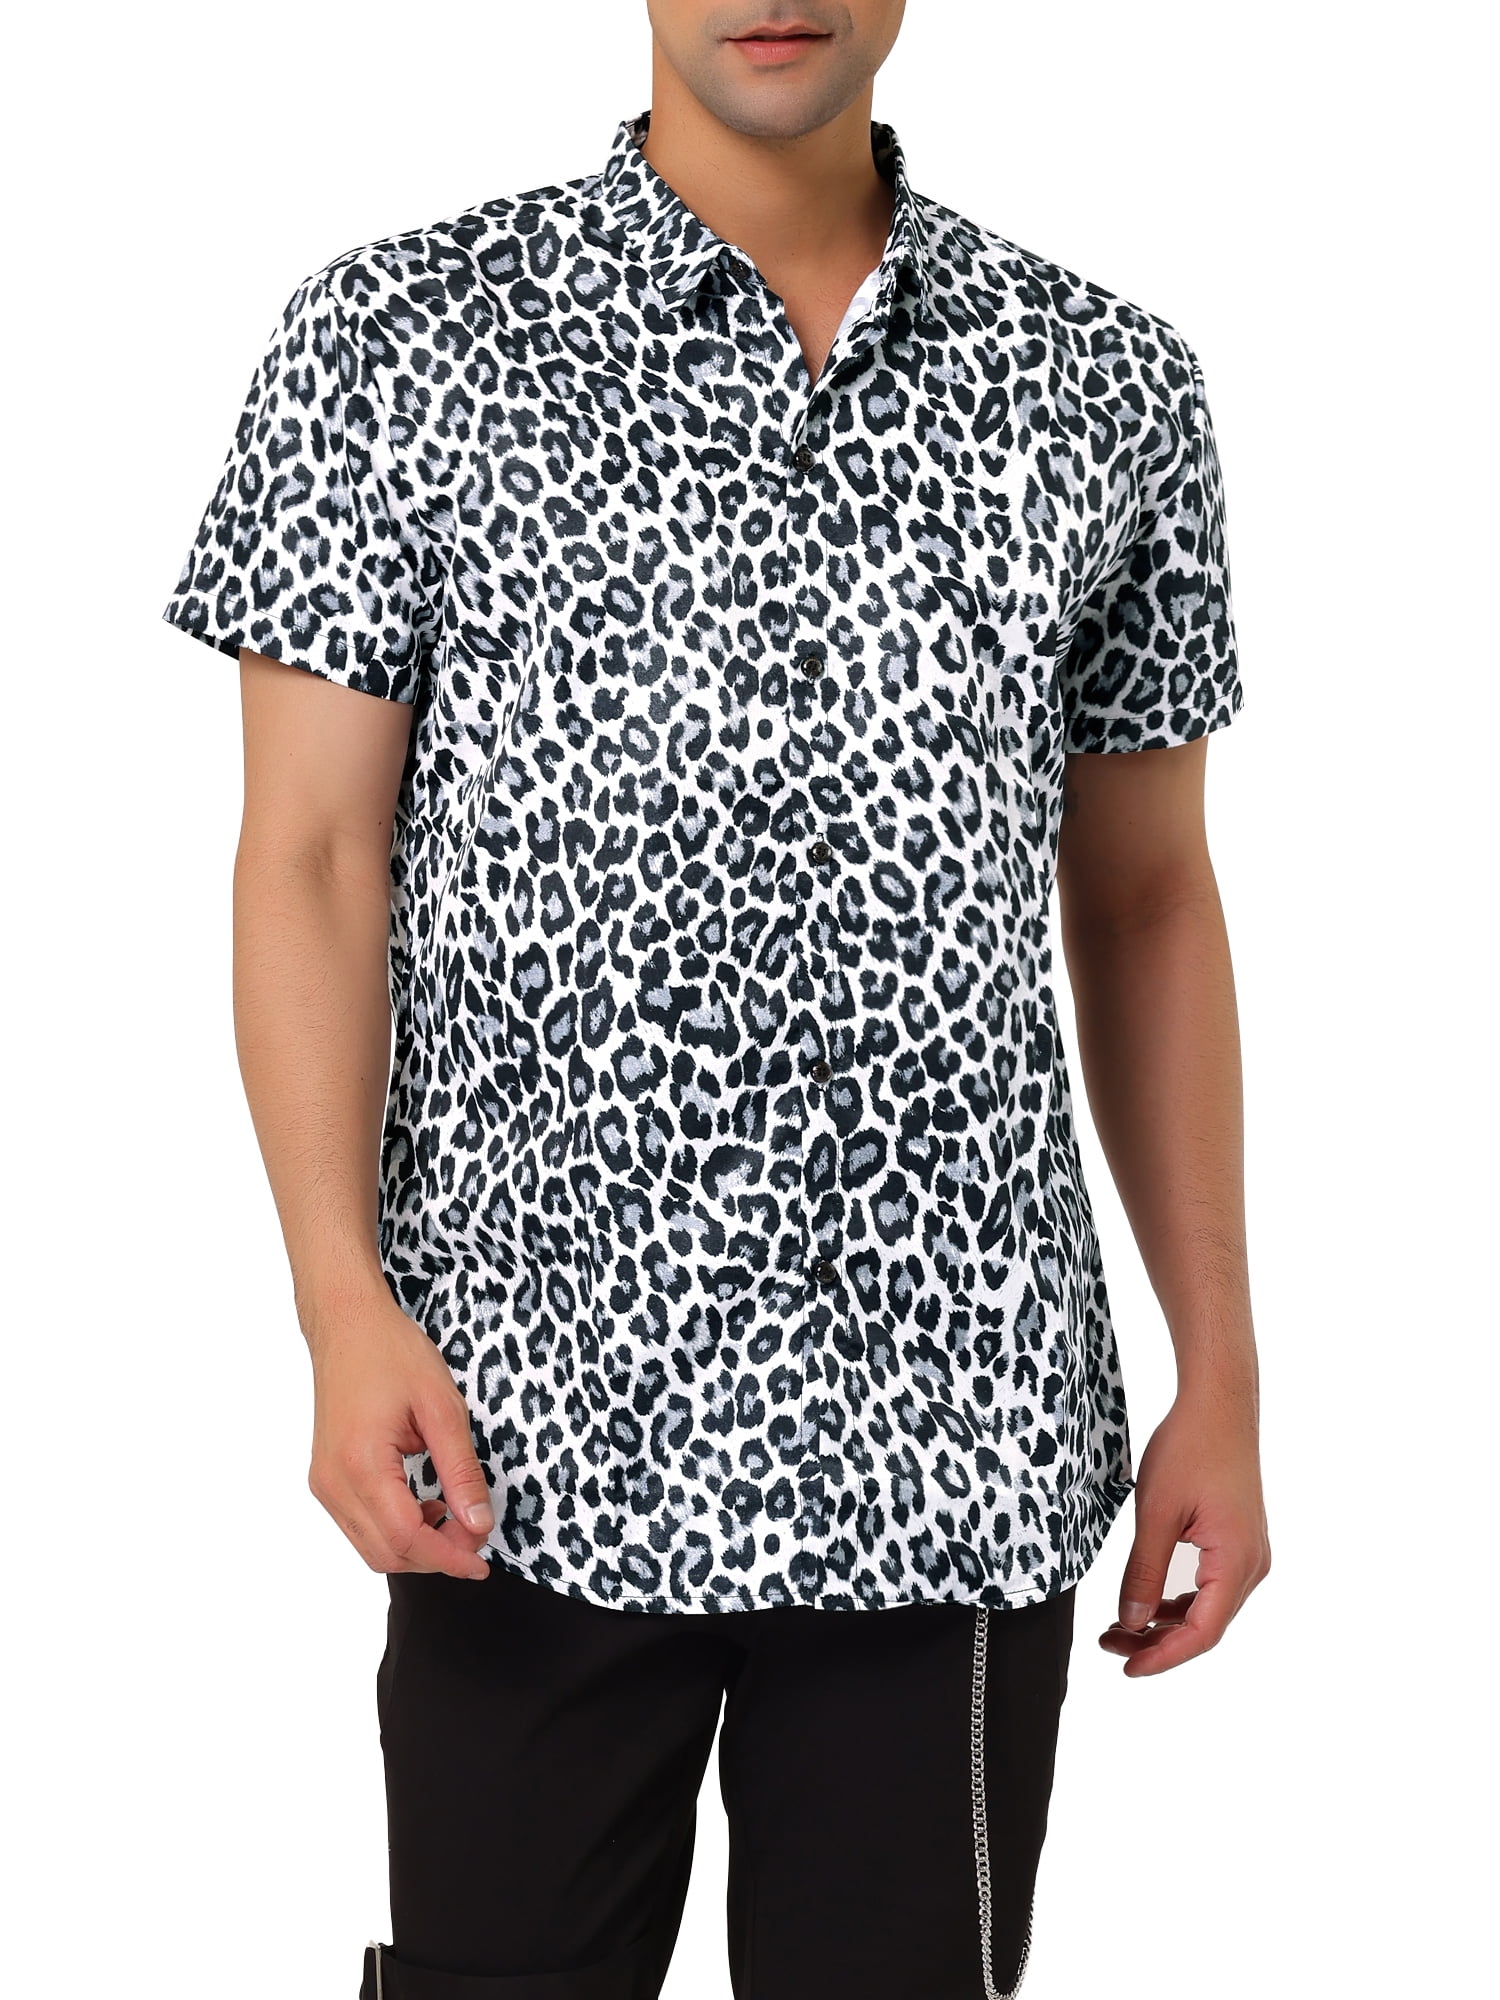 Lars Amadeus Men's Leopard Print Short Sleeve Vintage Animal Cheetah Print  Shirt 